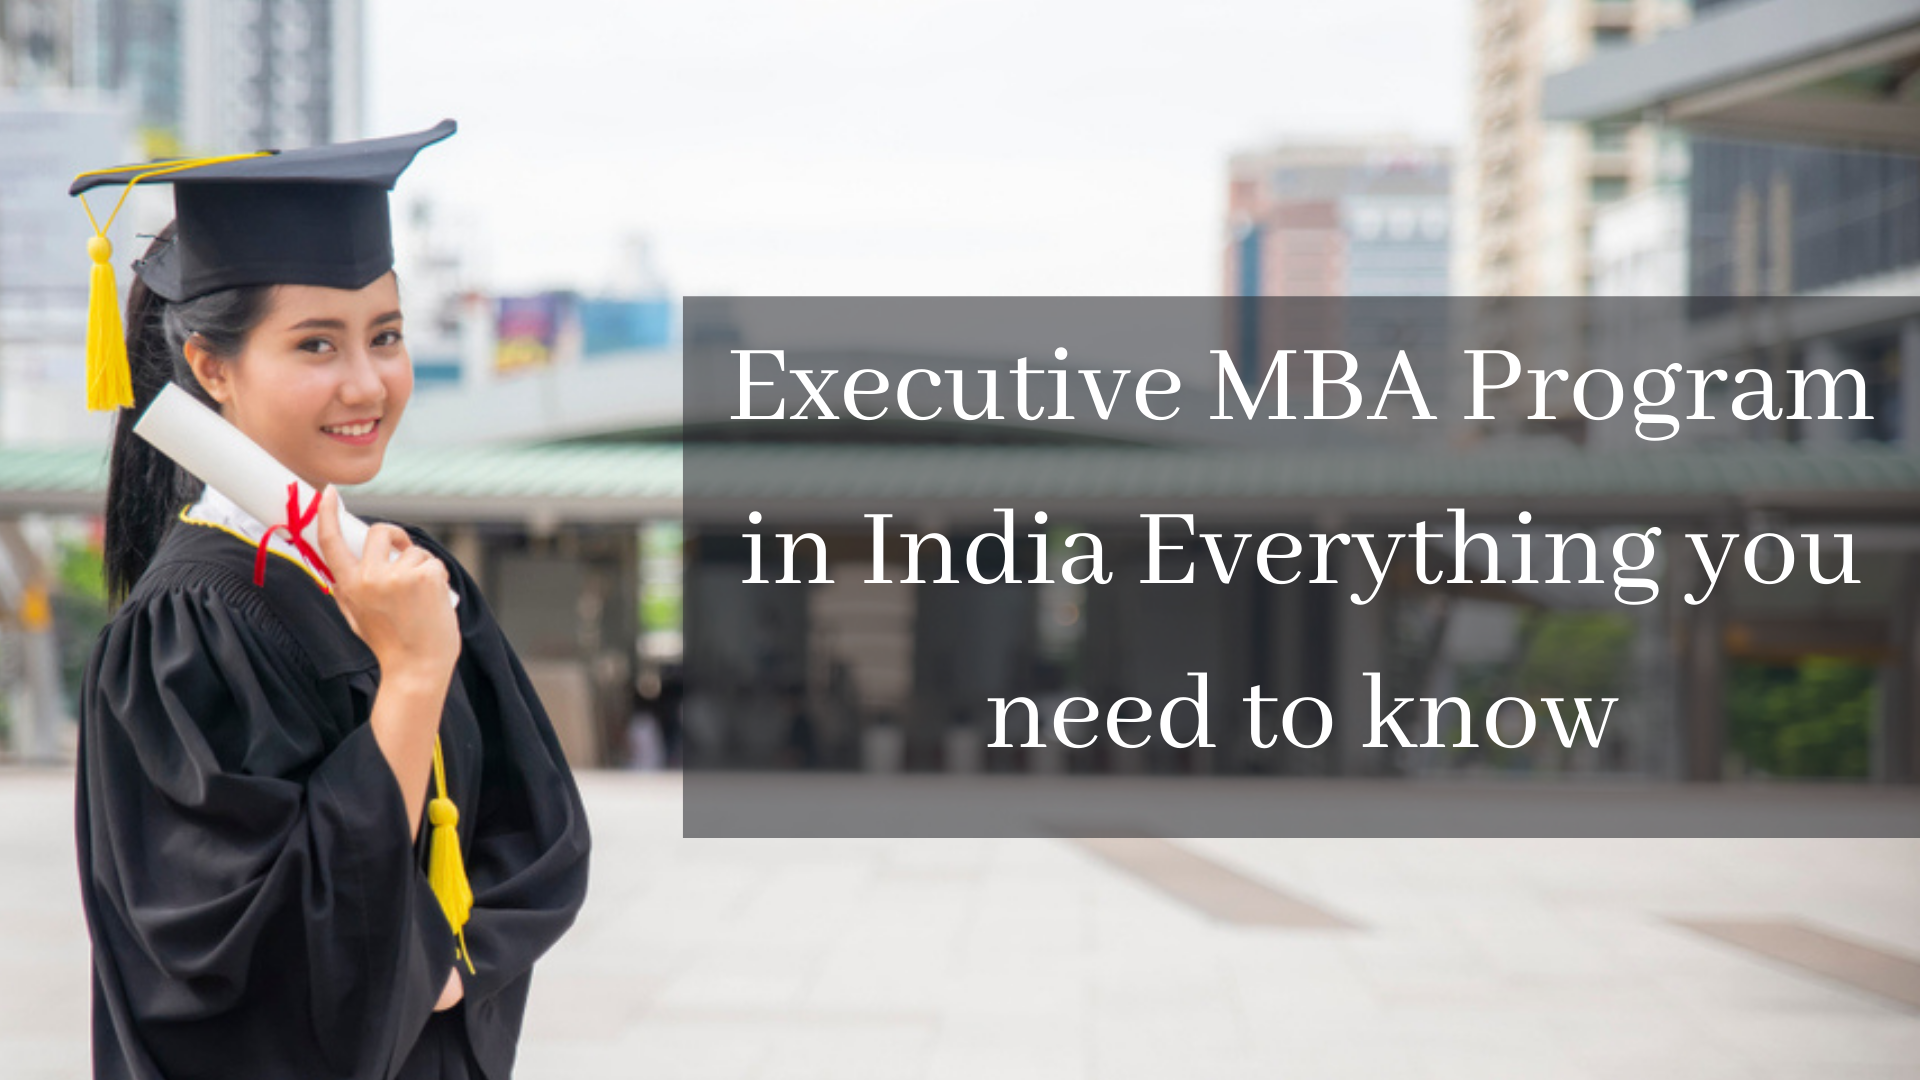 Executive MBA Program in India